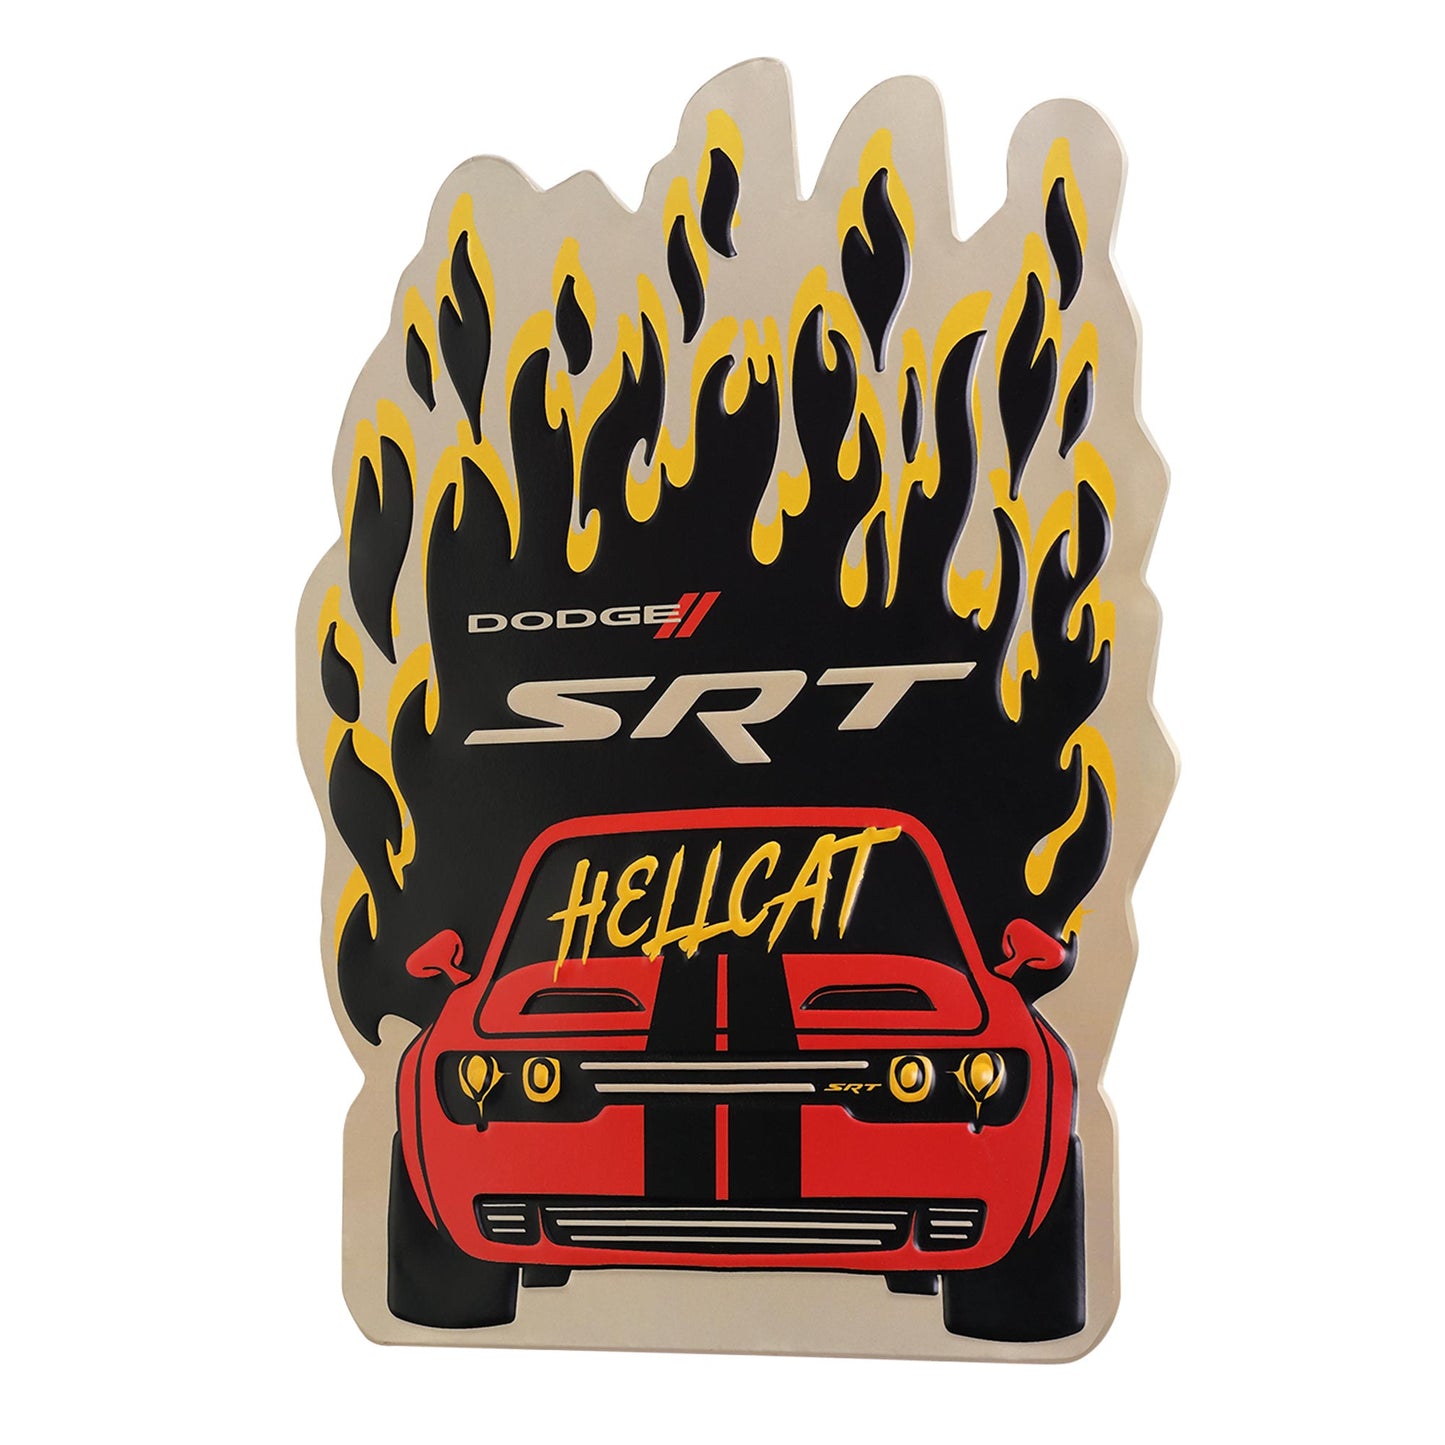 Dodge SRT Hellcat Embossed Shaped Metal Wall Sign - 14.5" x 17.4"